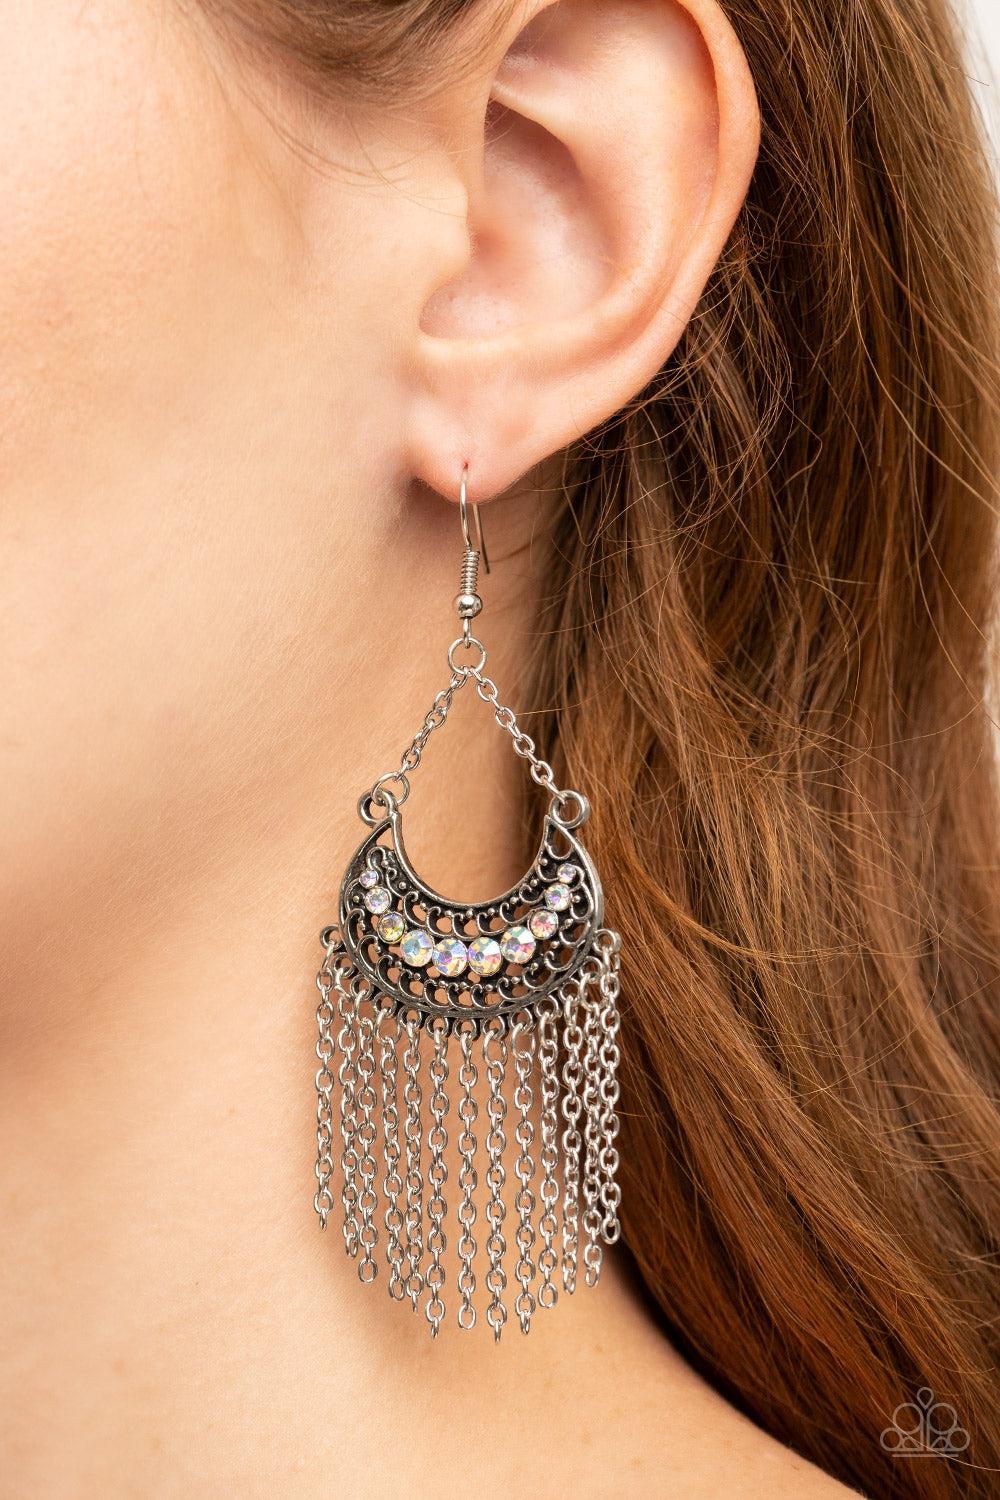 Greco Goddess Multi Iridescent Rhinestone Earrings - Paparazzi Accessories-on model - CarasShop.com - $5 Jewelry by Cara Jewels